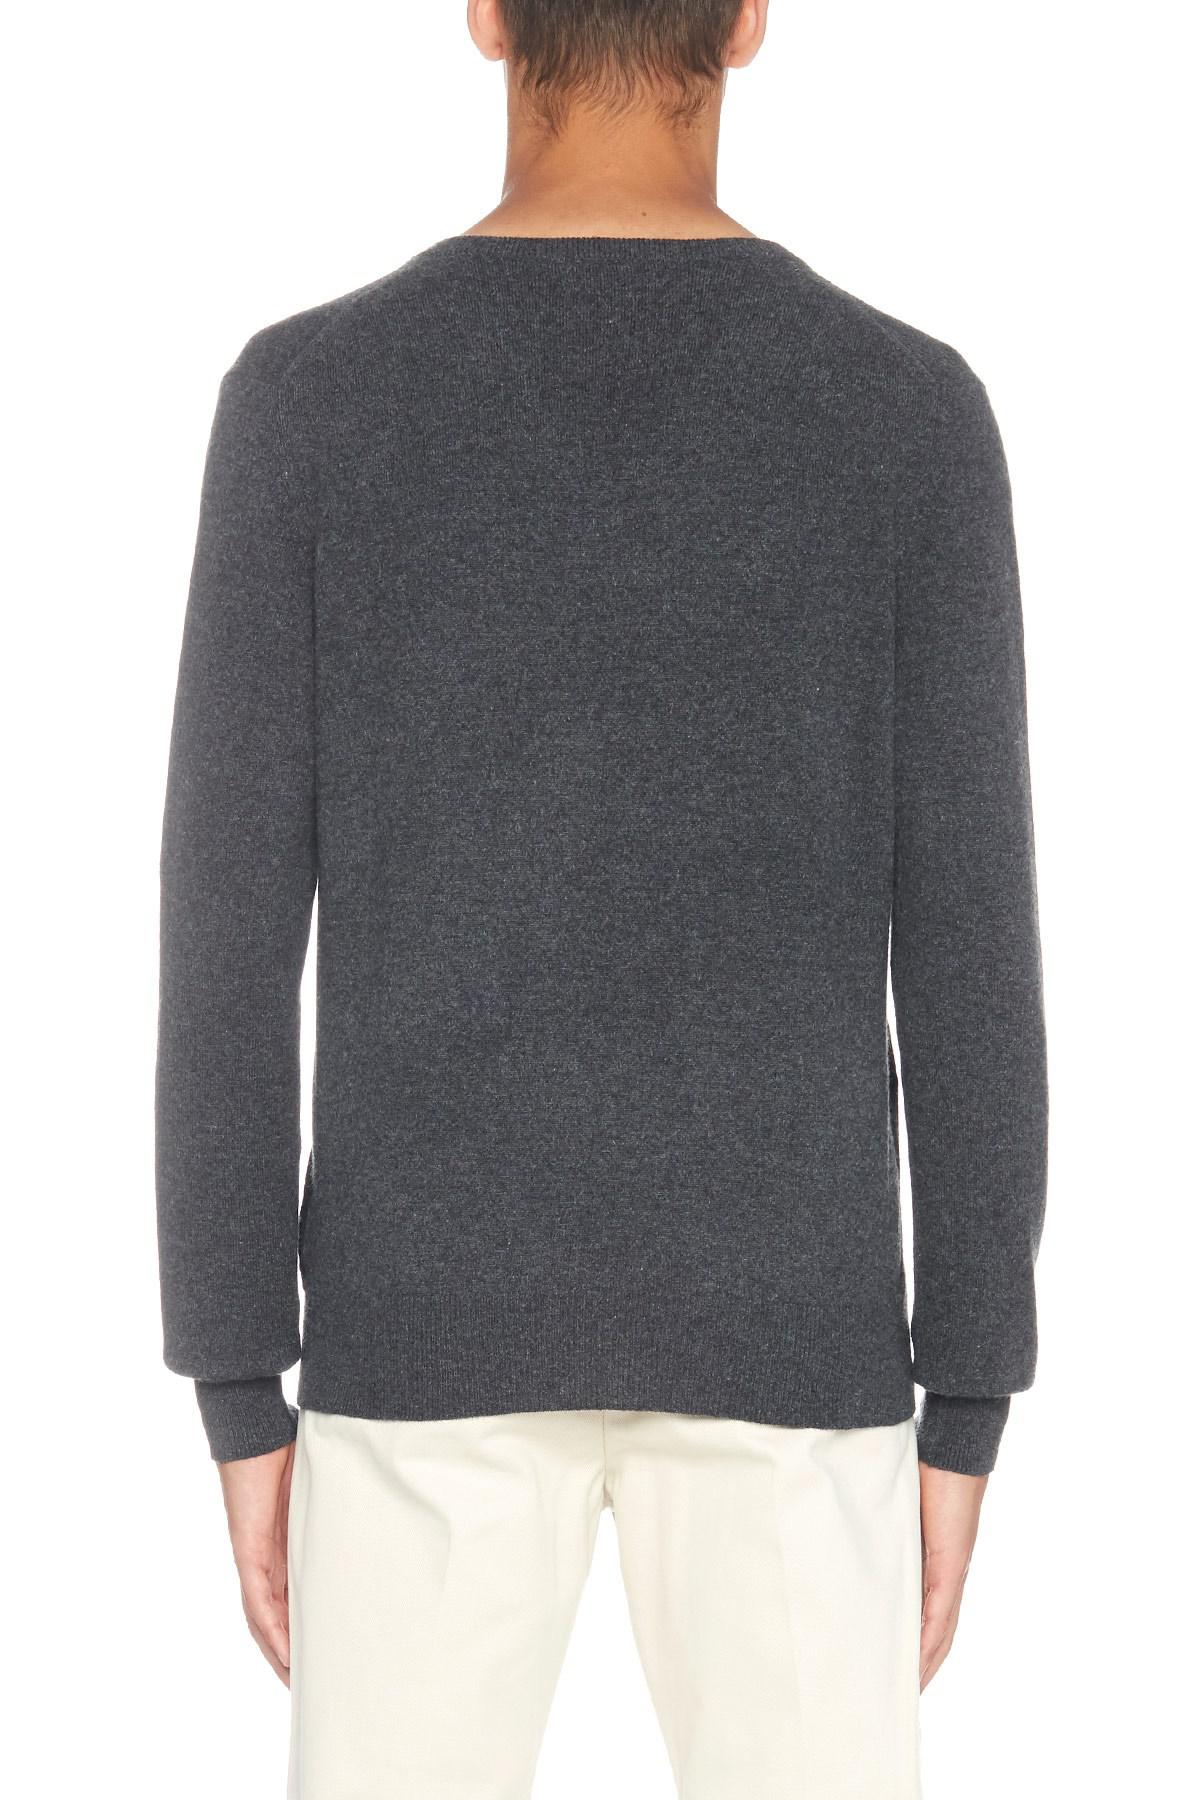 Ballantyne Cashmere Diamond Pattern Sweater in Gray for Men - Lyst